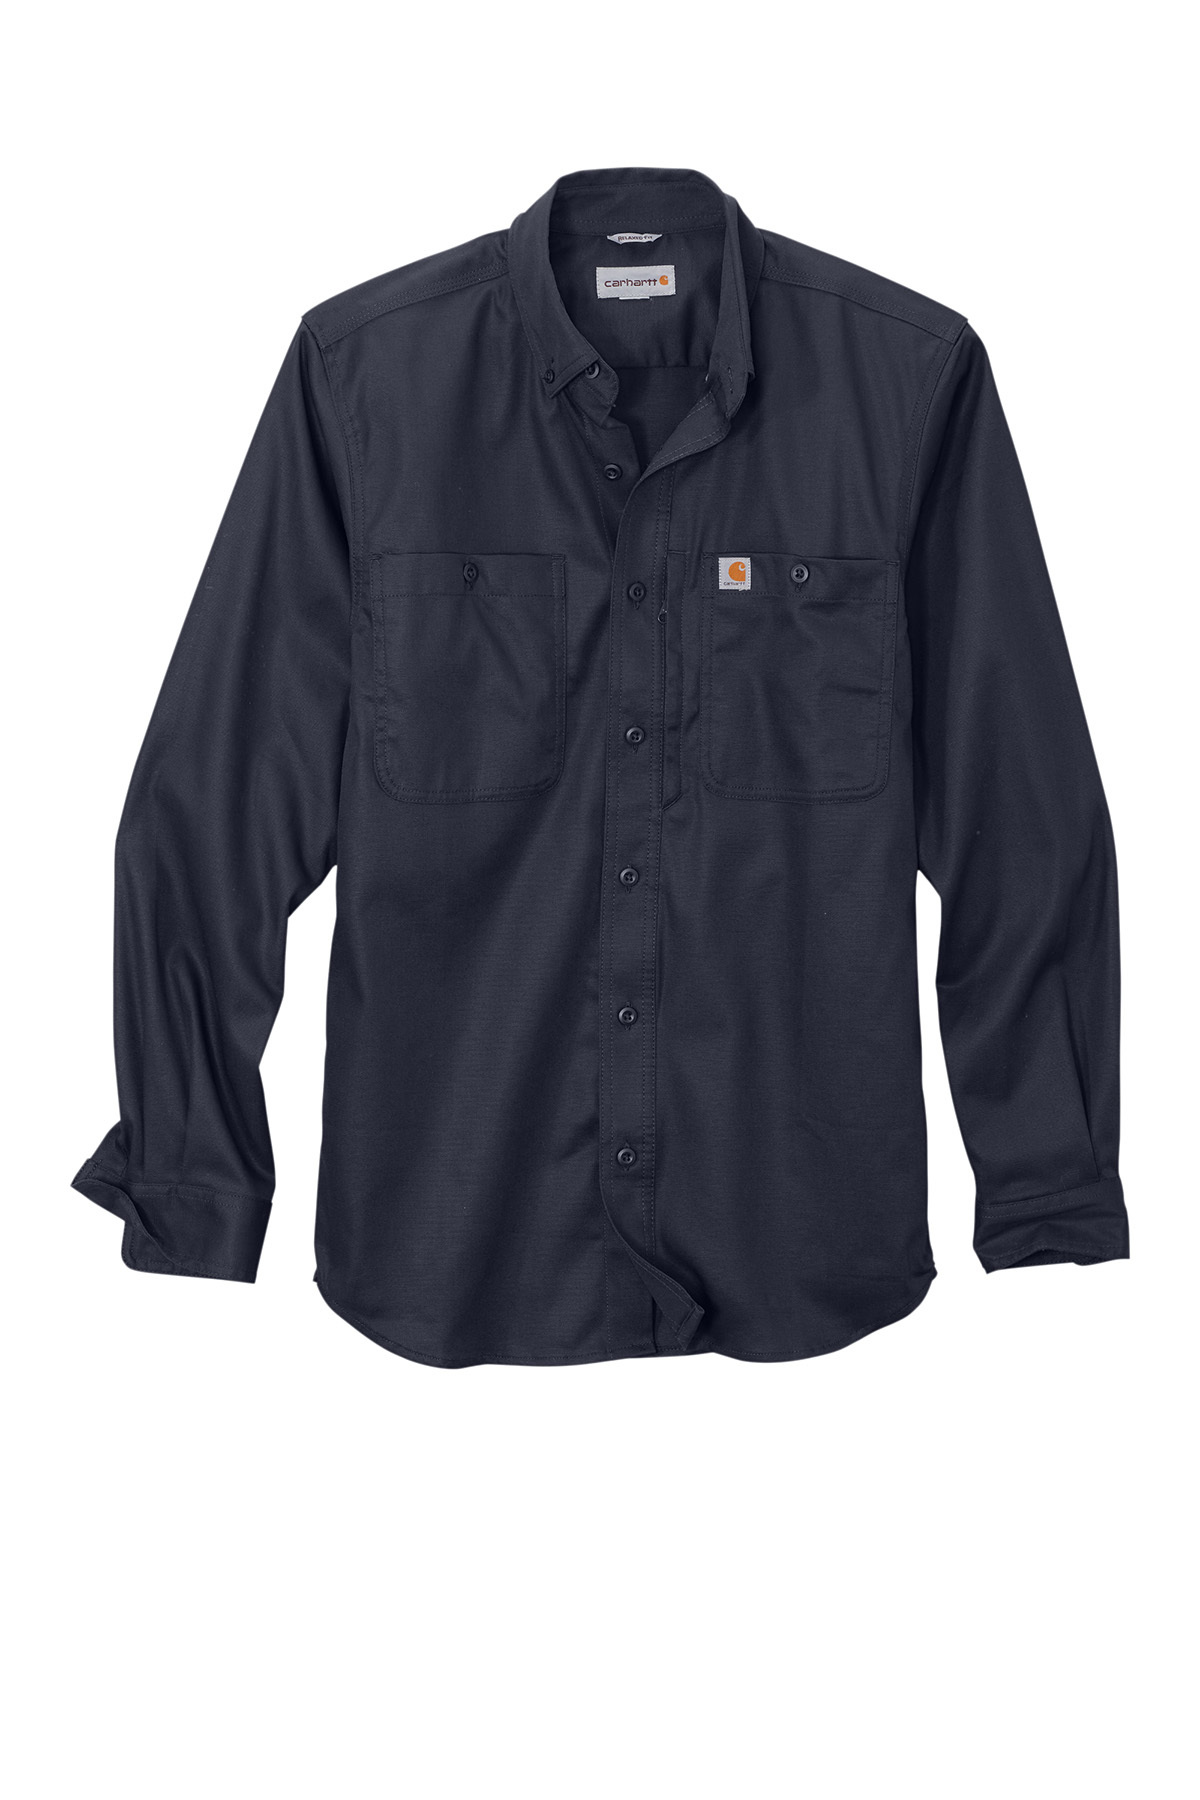 Carhartt Rugged Professional Series SanMar | Product | Sleeve Shirt Long